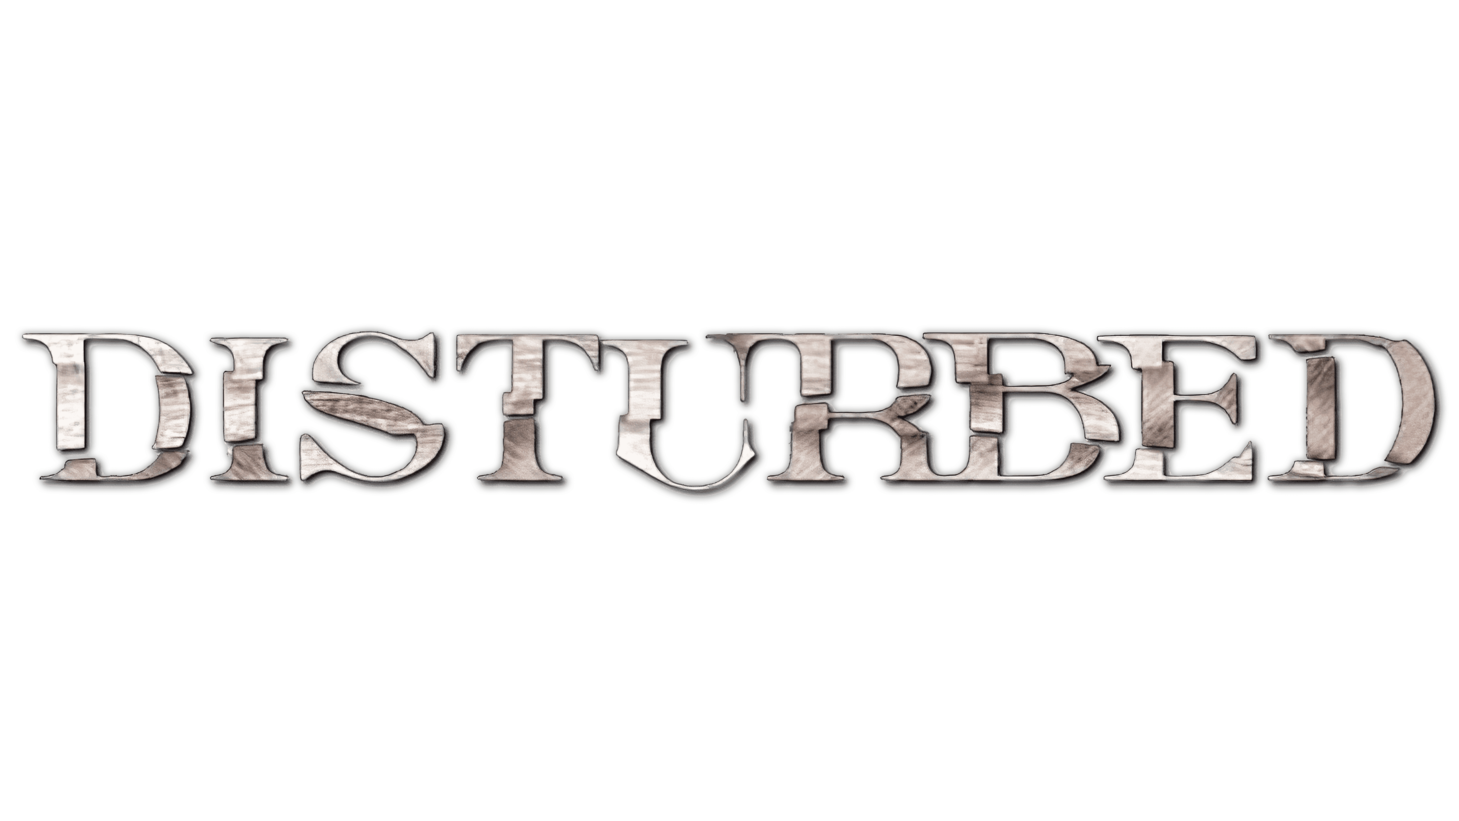 Disturbed sign 2015 2018